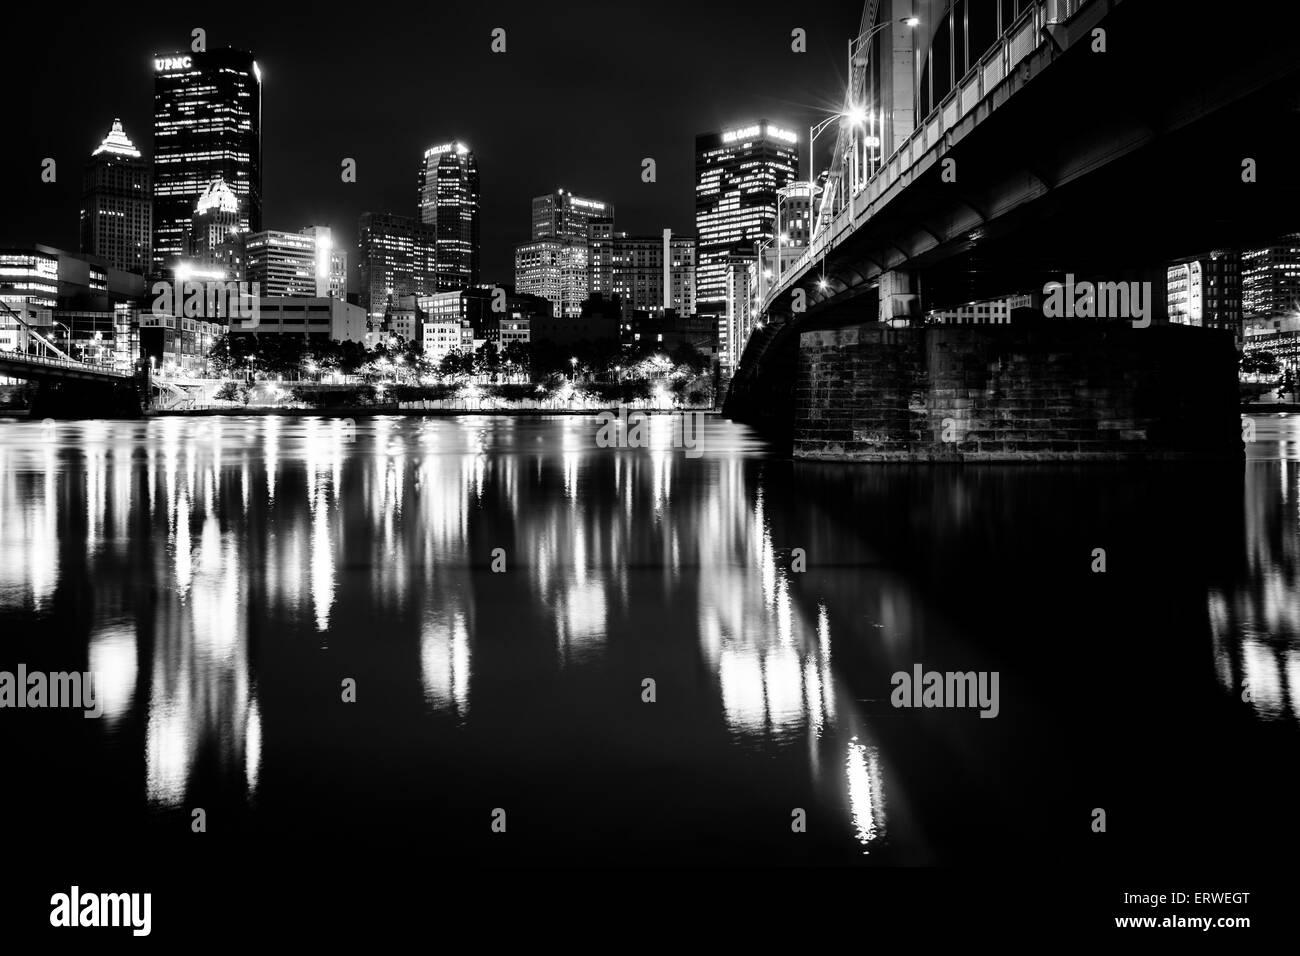 Andy Warhol-Brücke und Skyline bei Nacht, in Pittsburgh, Pennsylvania. Stockfoto